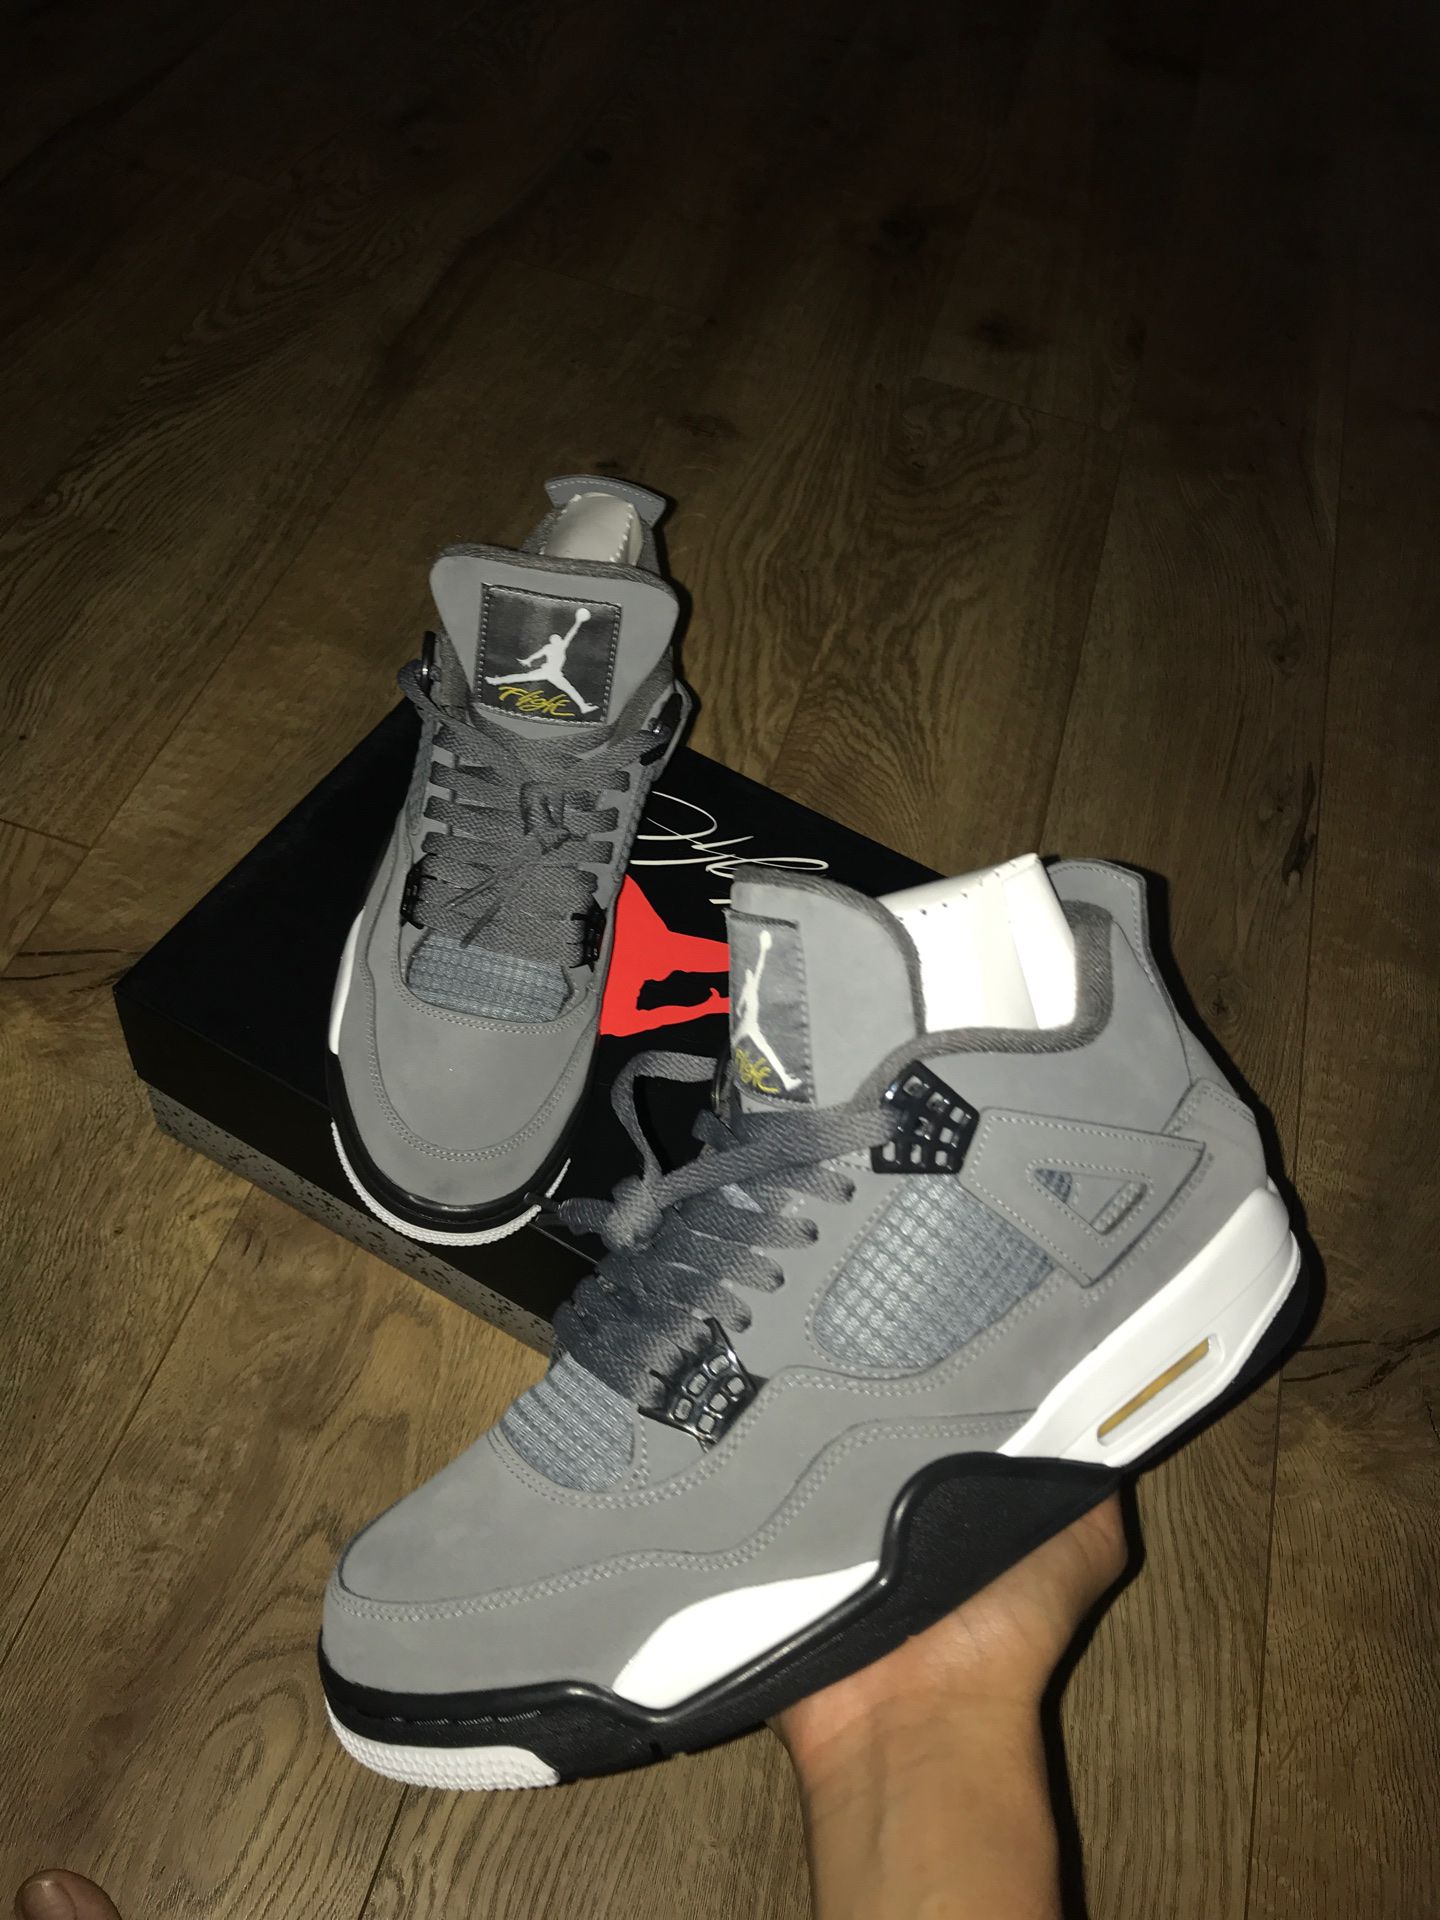 Jordan 4 “cool grey” size 9.5